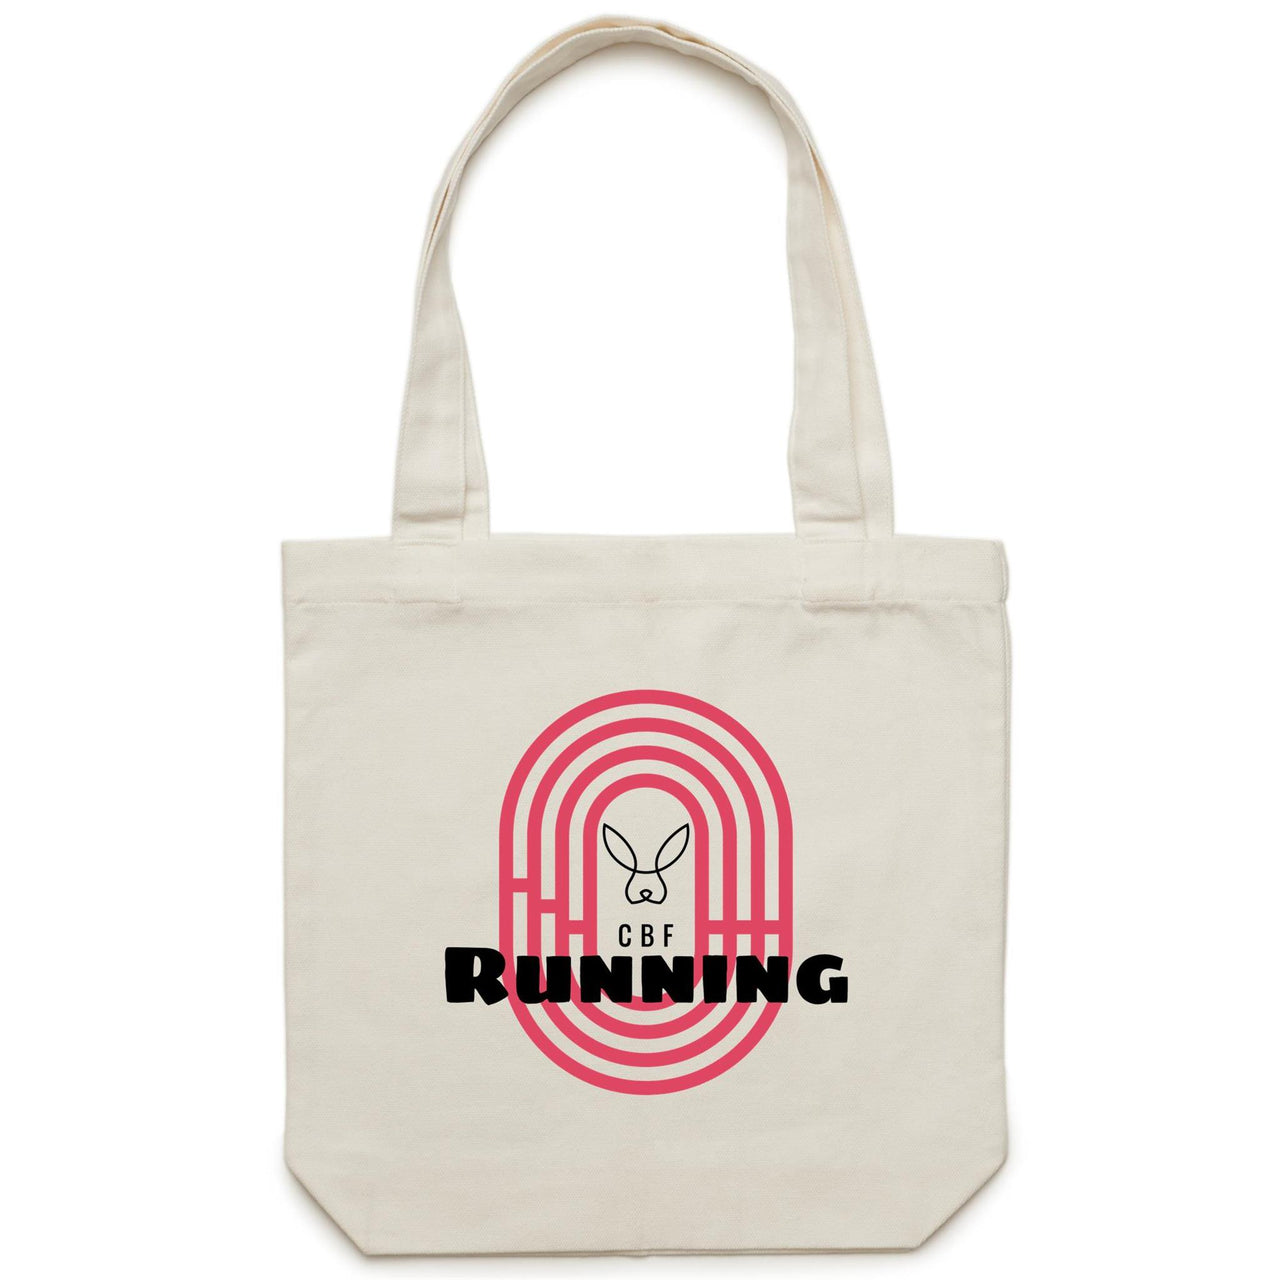 CBF Running Canvas Tote Bag